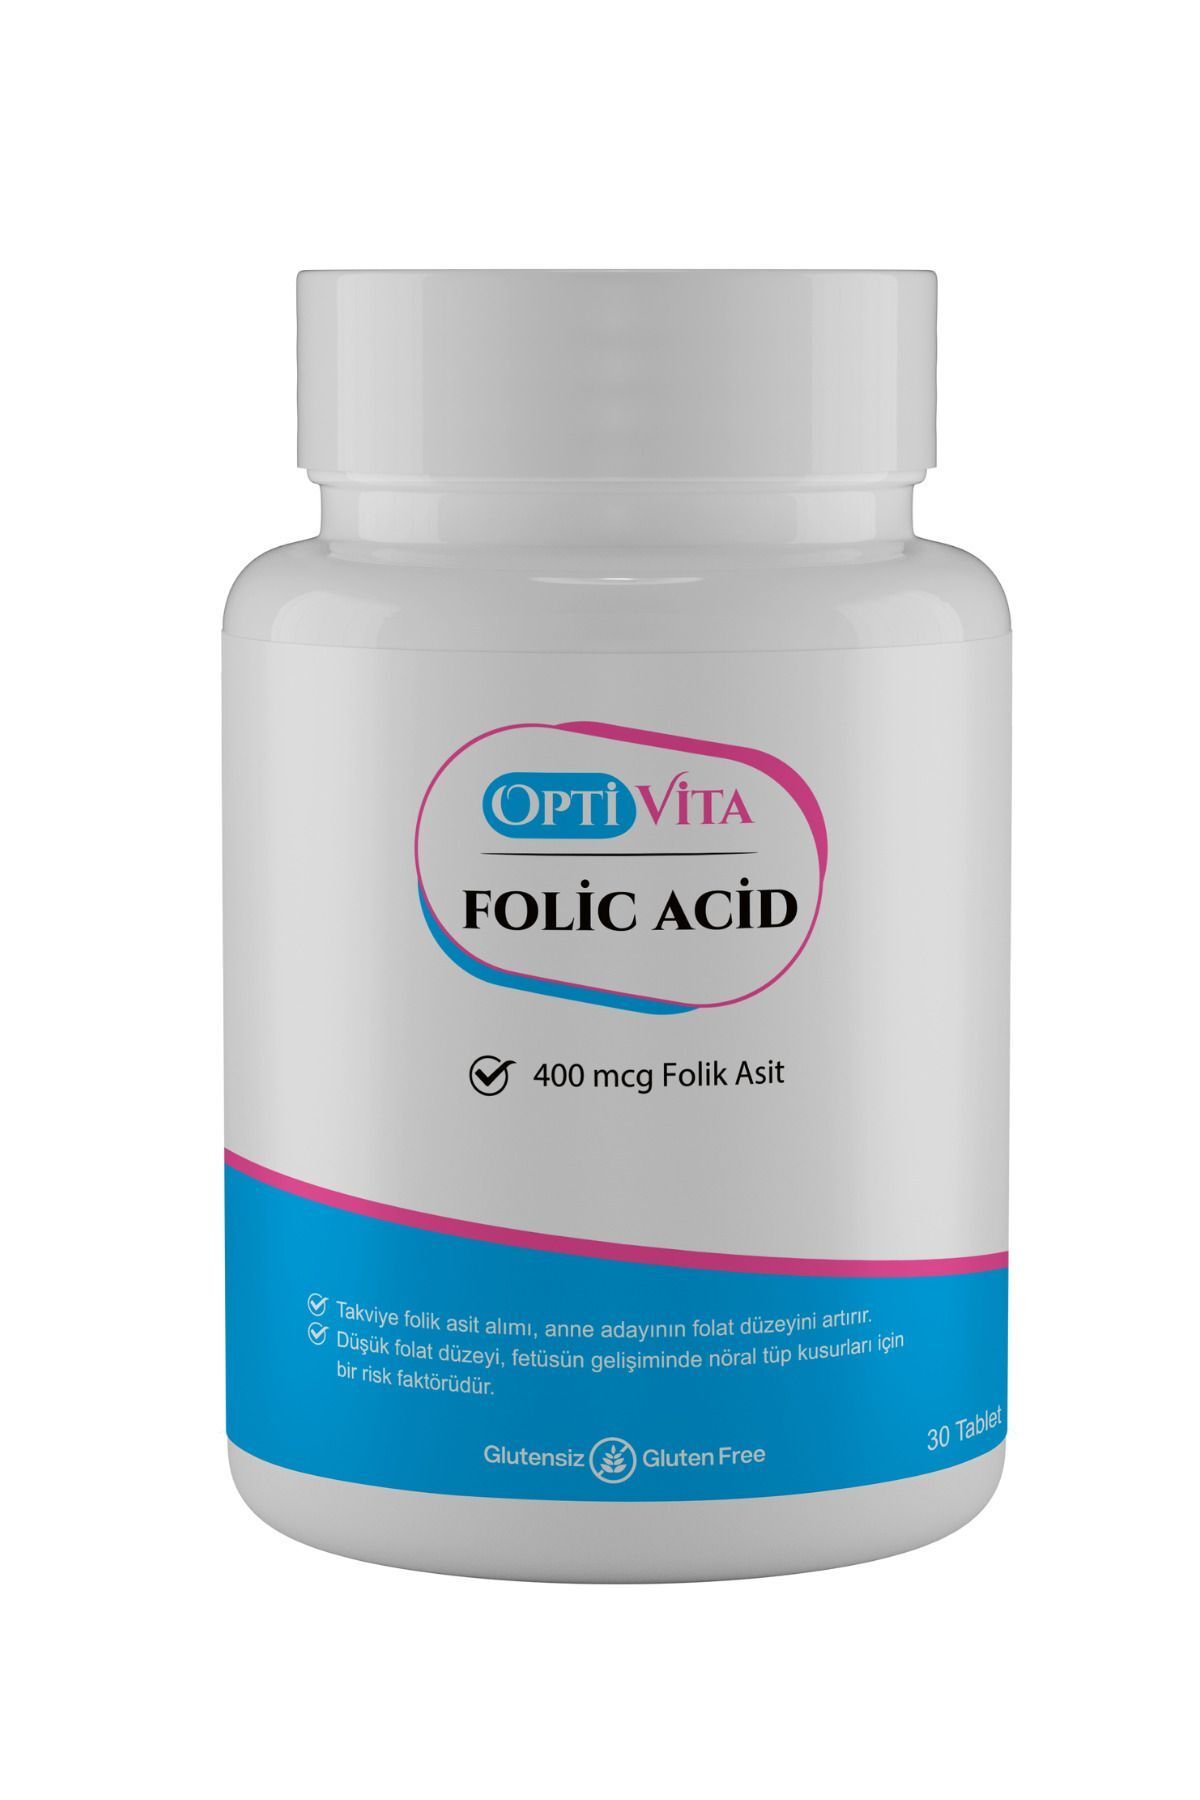 Optivita Folic Acid 400 mcg 30 Tablet Folik Asit